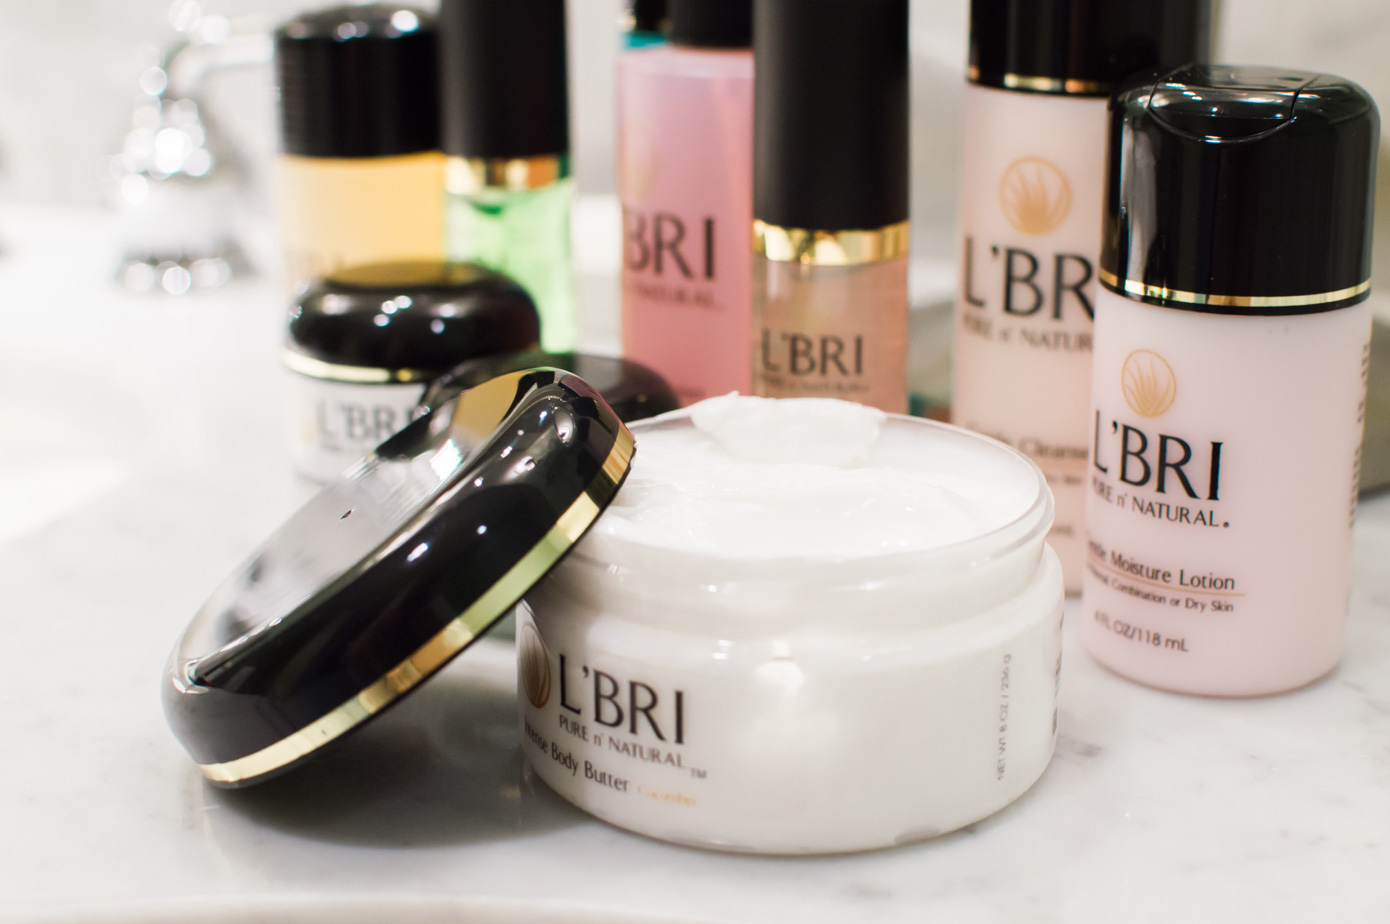 L'BRI Review | Natural Skincare Review | Louella Reese Life & Style Blog